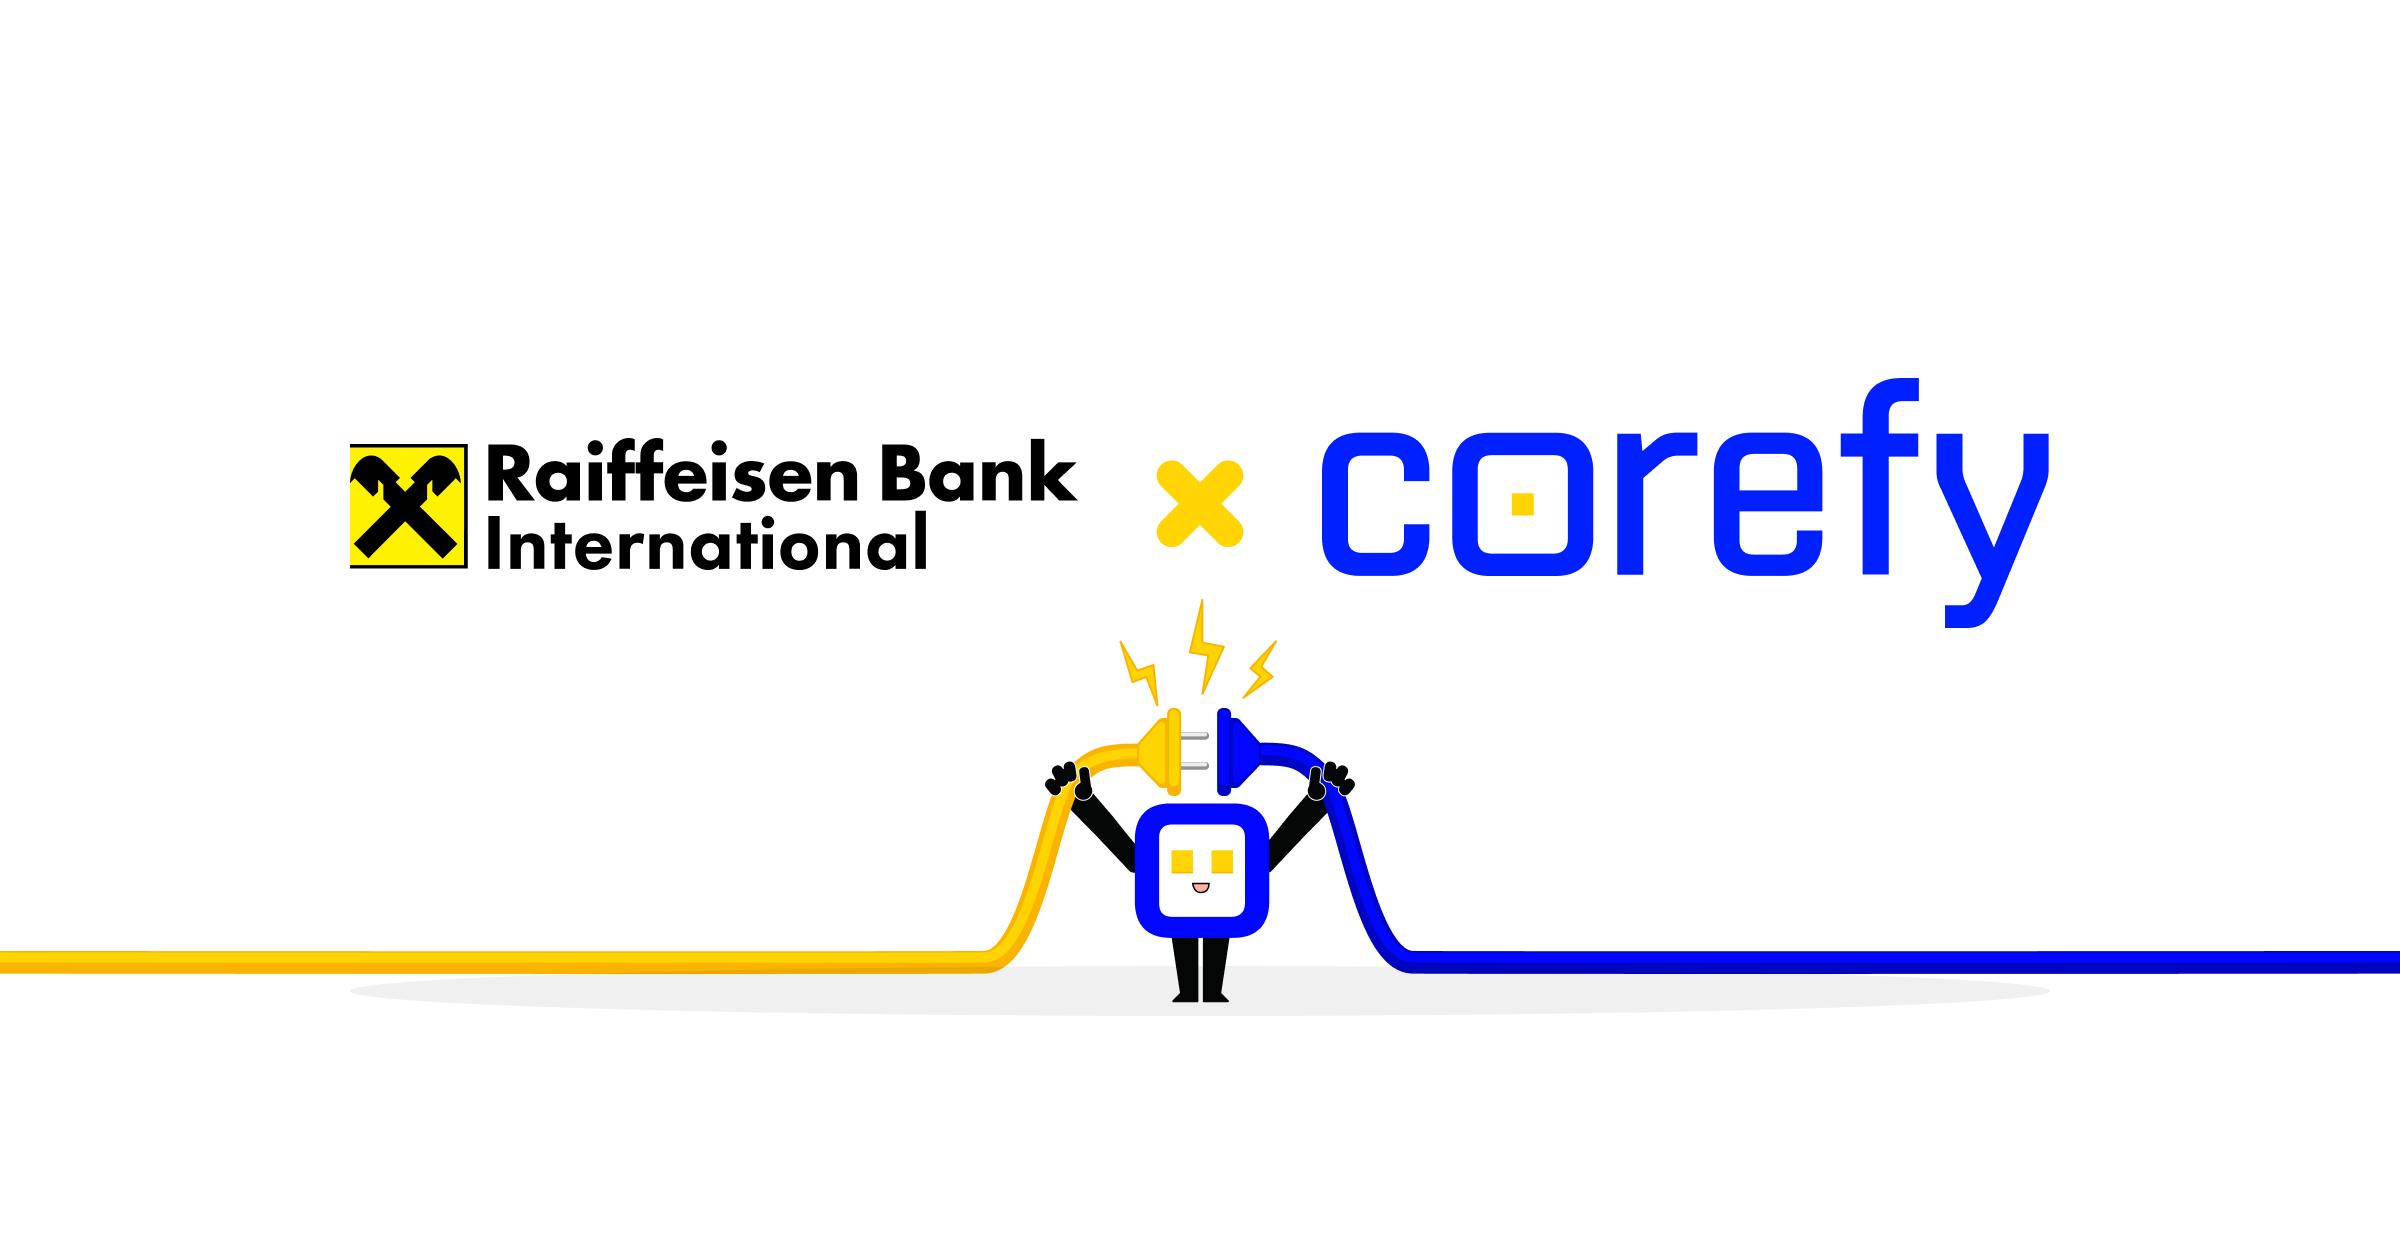 New integration with Raiffeisen Bank